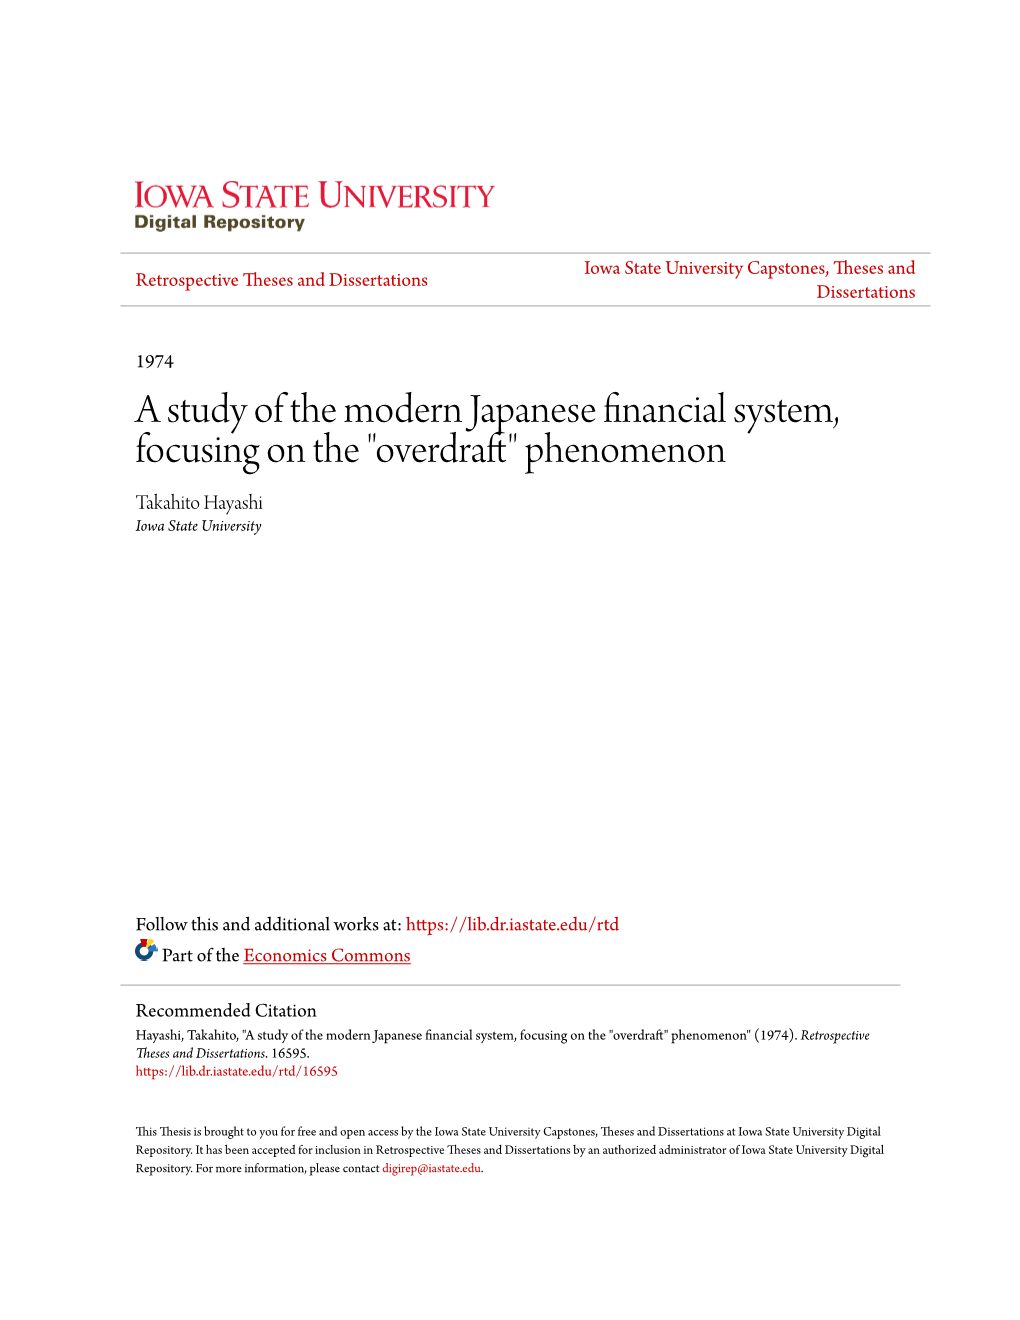 A Study of the Modern Japanese Financial System, Focusing on the "Overdraft" Phenomenon Takahito Hayashi Iowa State University